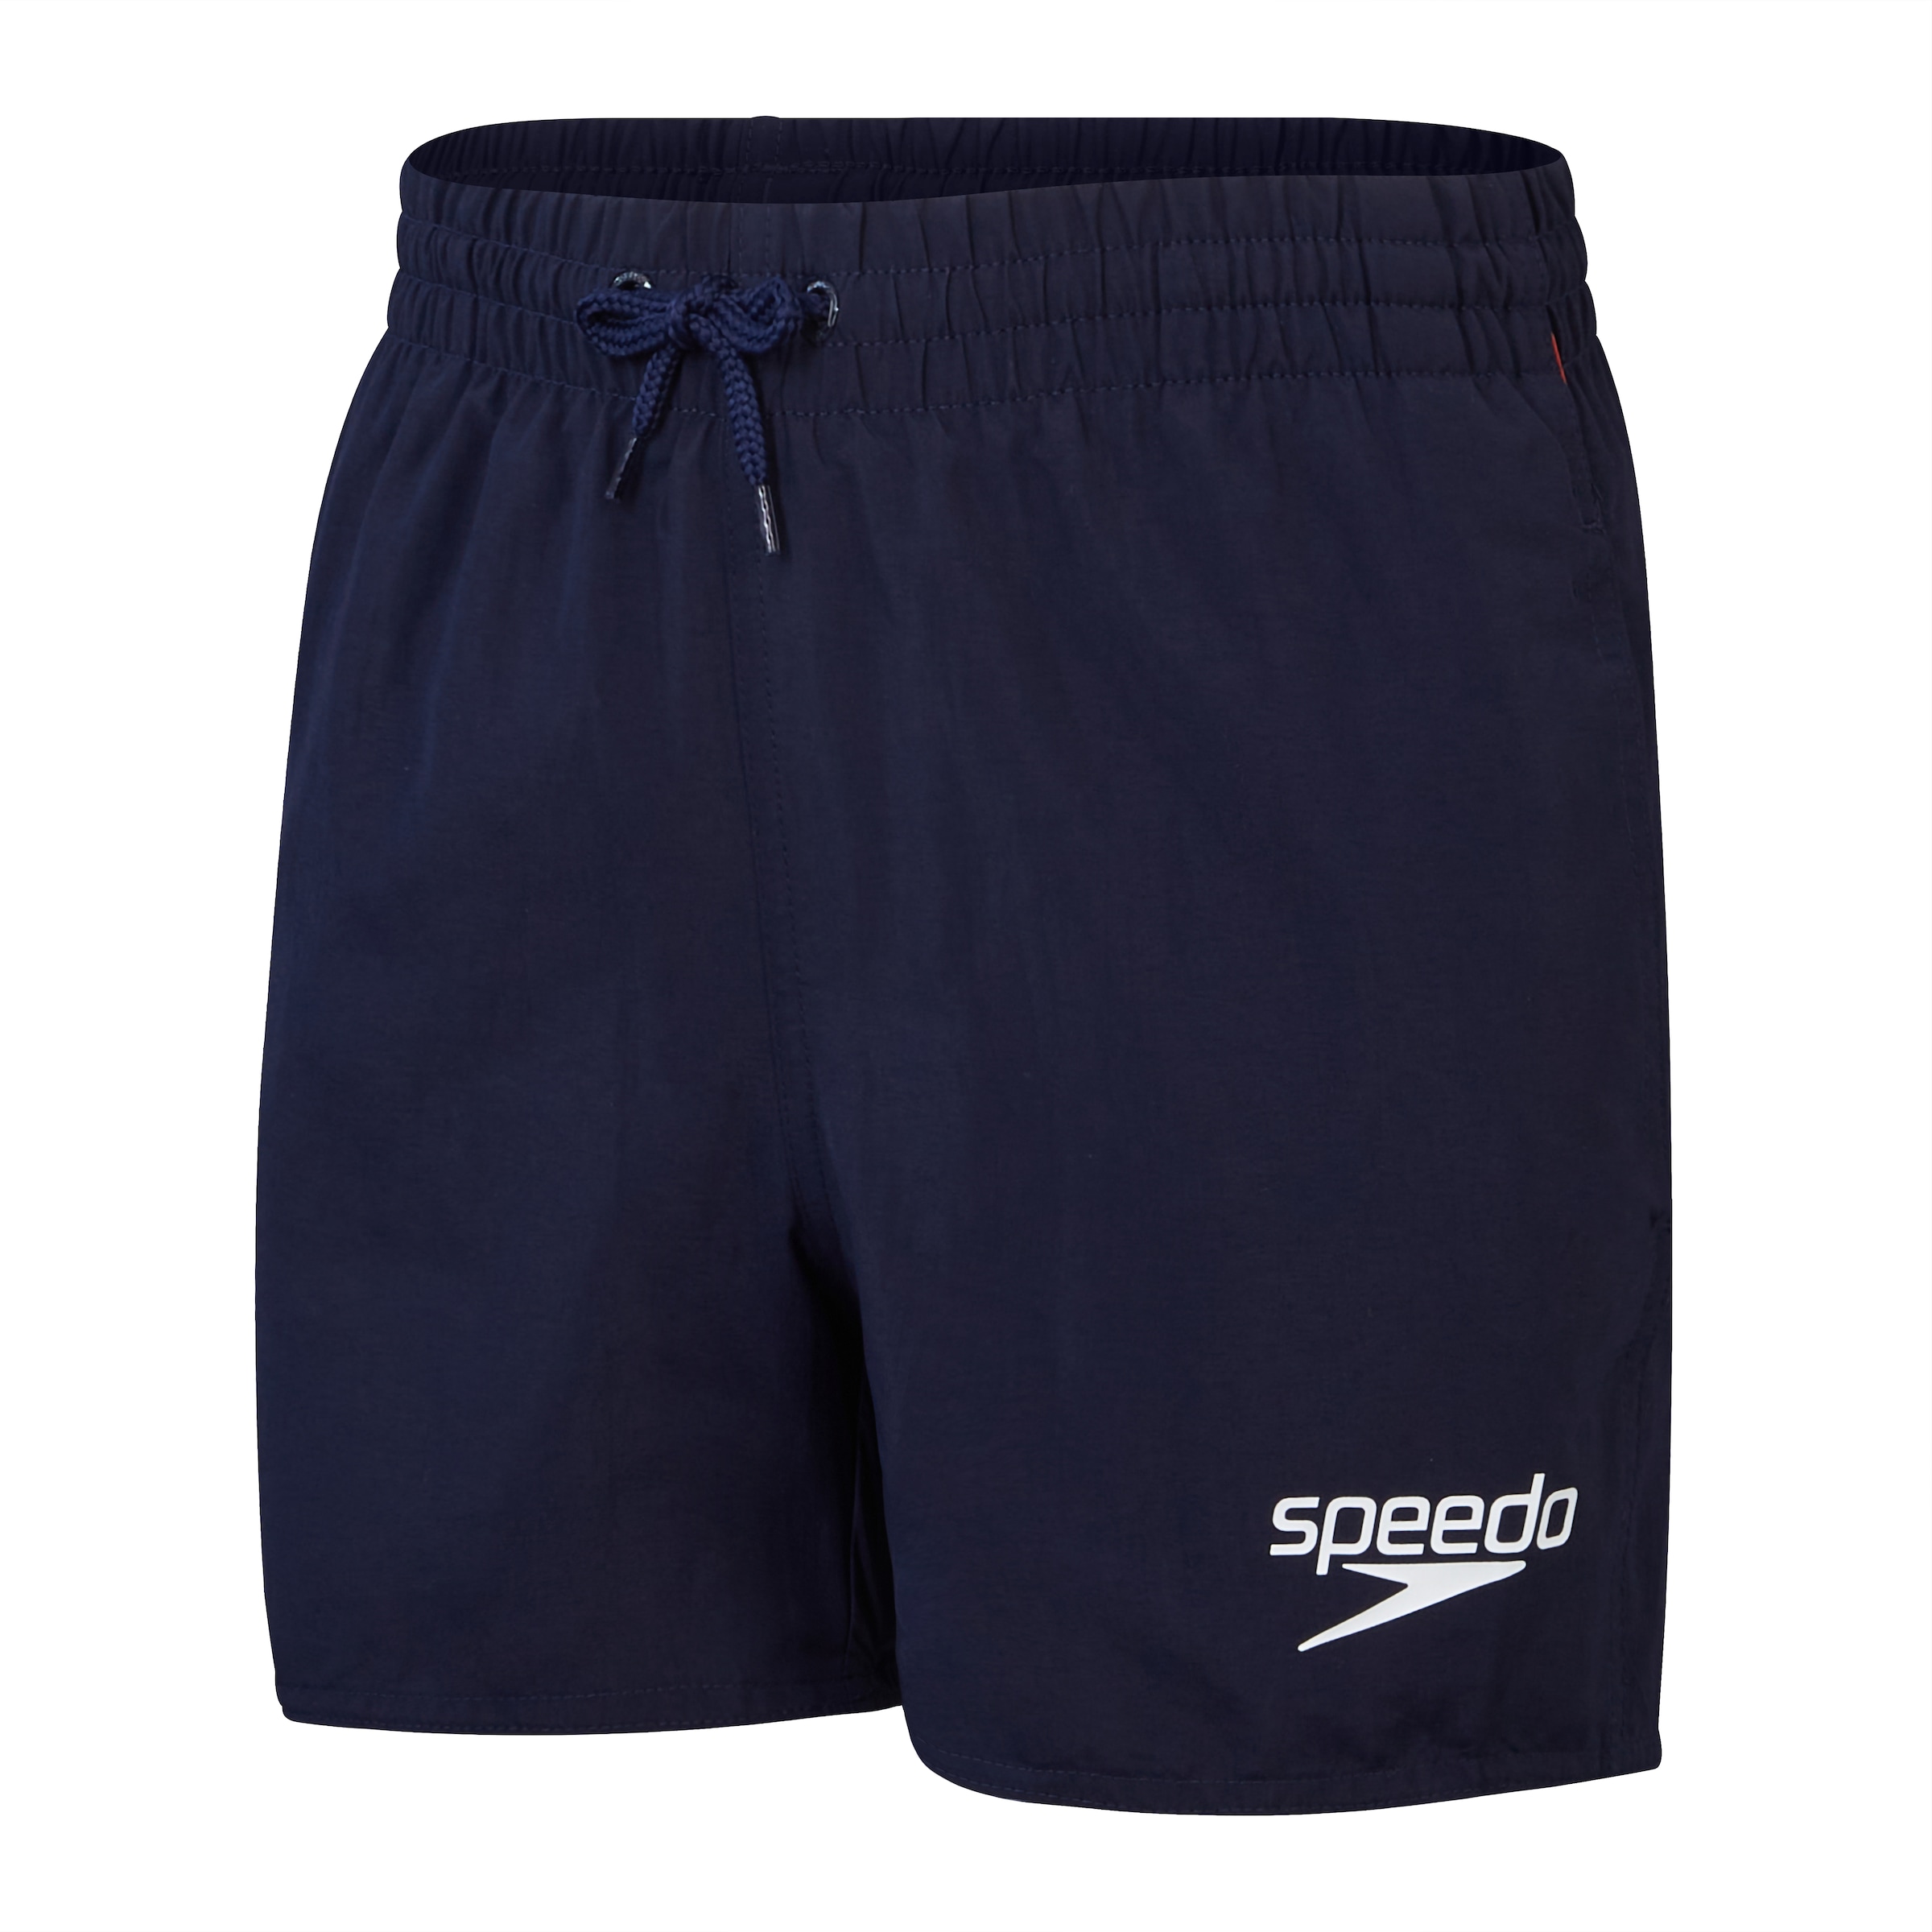 Speedo Badeshorts »Kinder Bade-Shorts John«, Verstellbare Passform